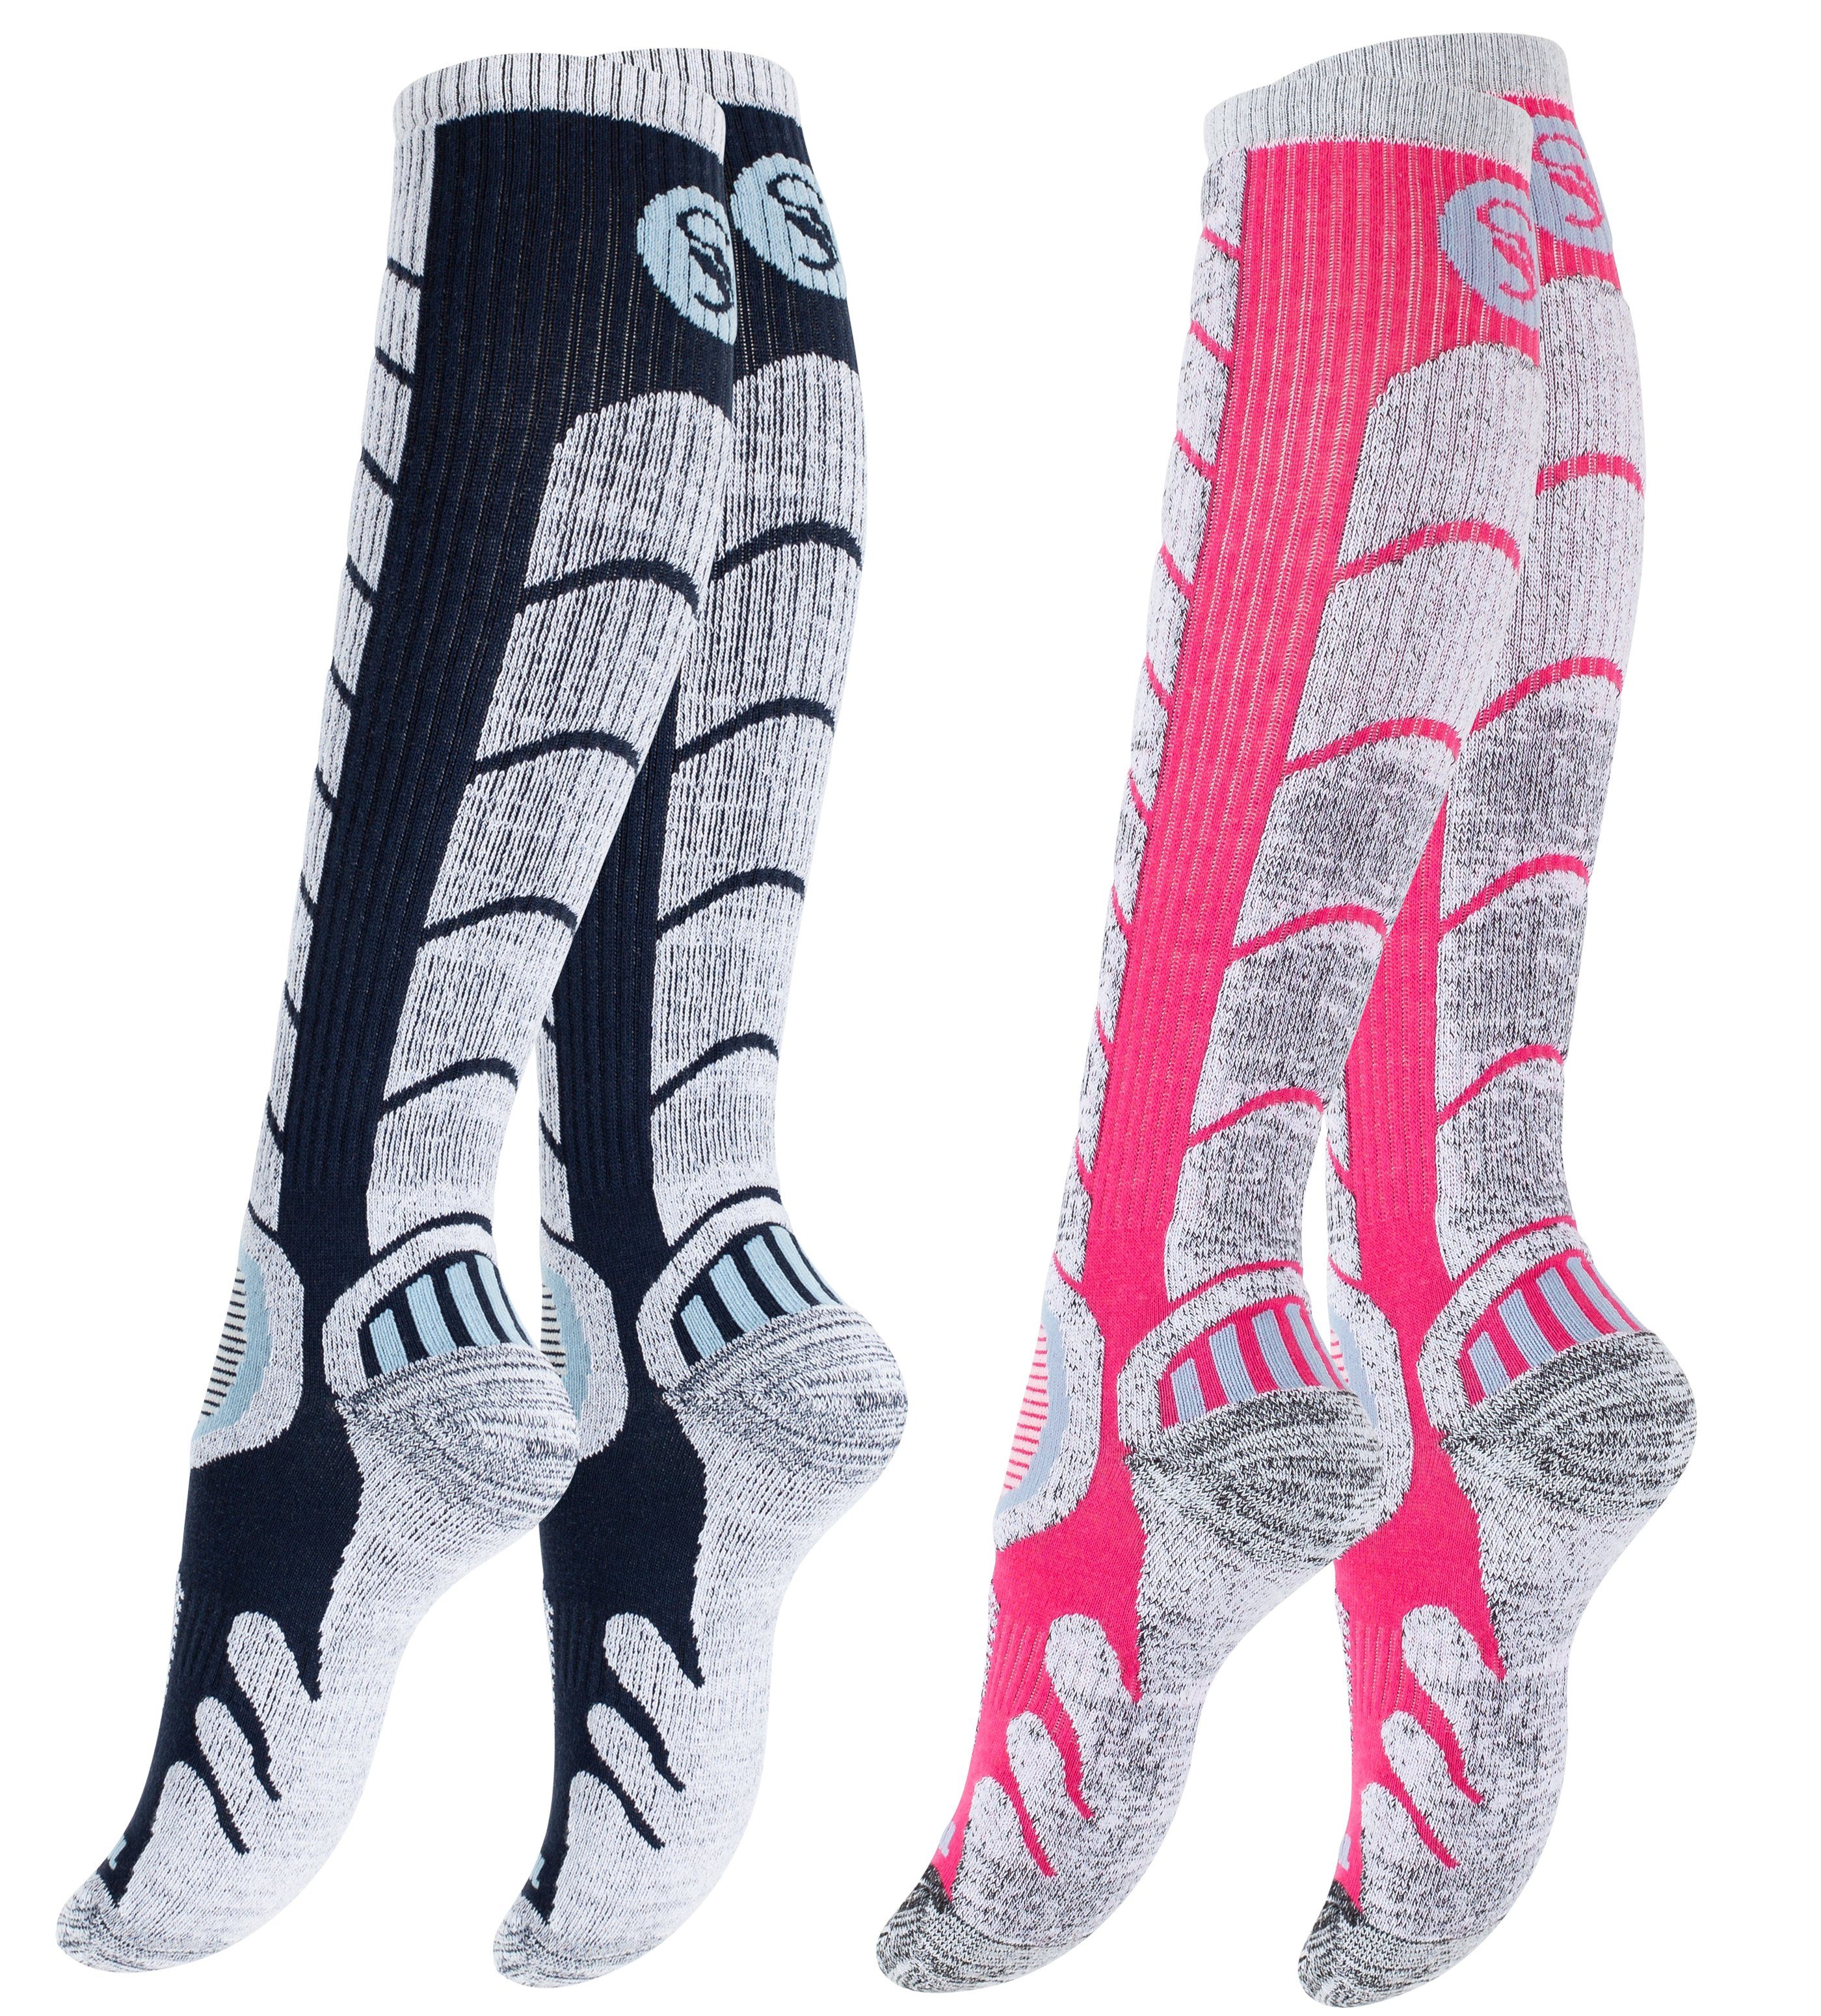 Paar Socken Skisocken Spezialpolsterung, 2 mit & Ski Paar Snowboard Marine/Pink Stark Soul® 2